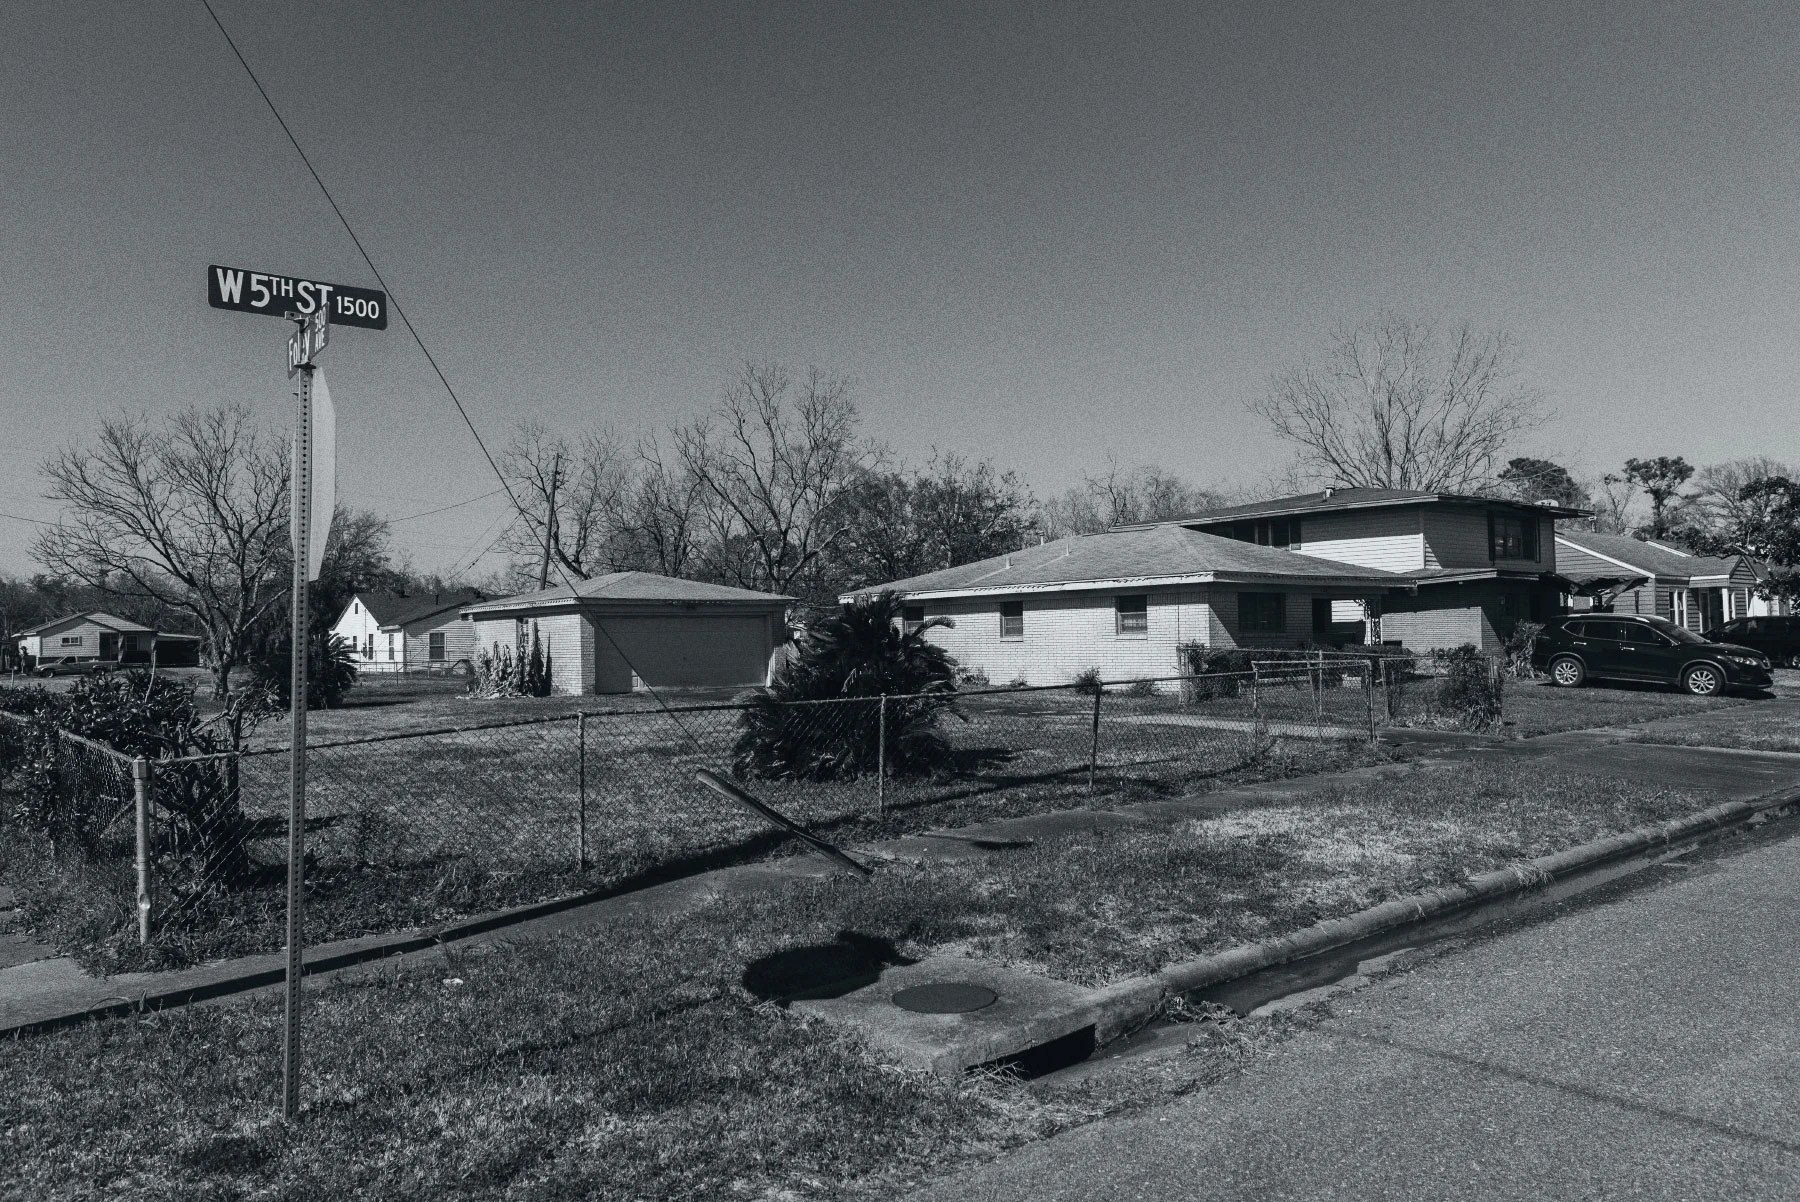 Homes in a residential neighborhood in Port Arthur Texas